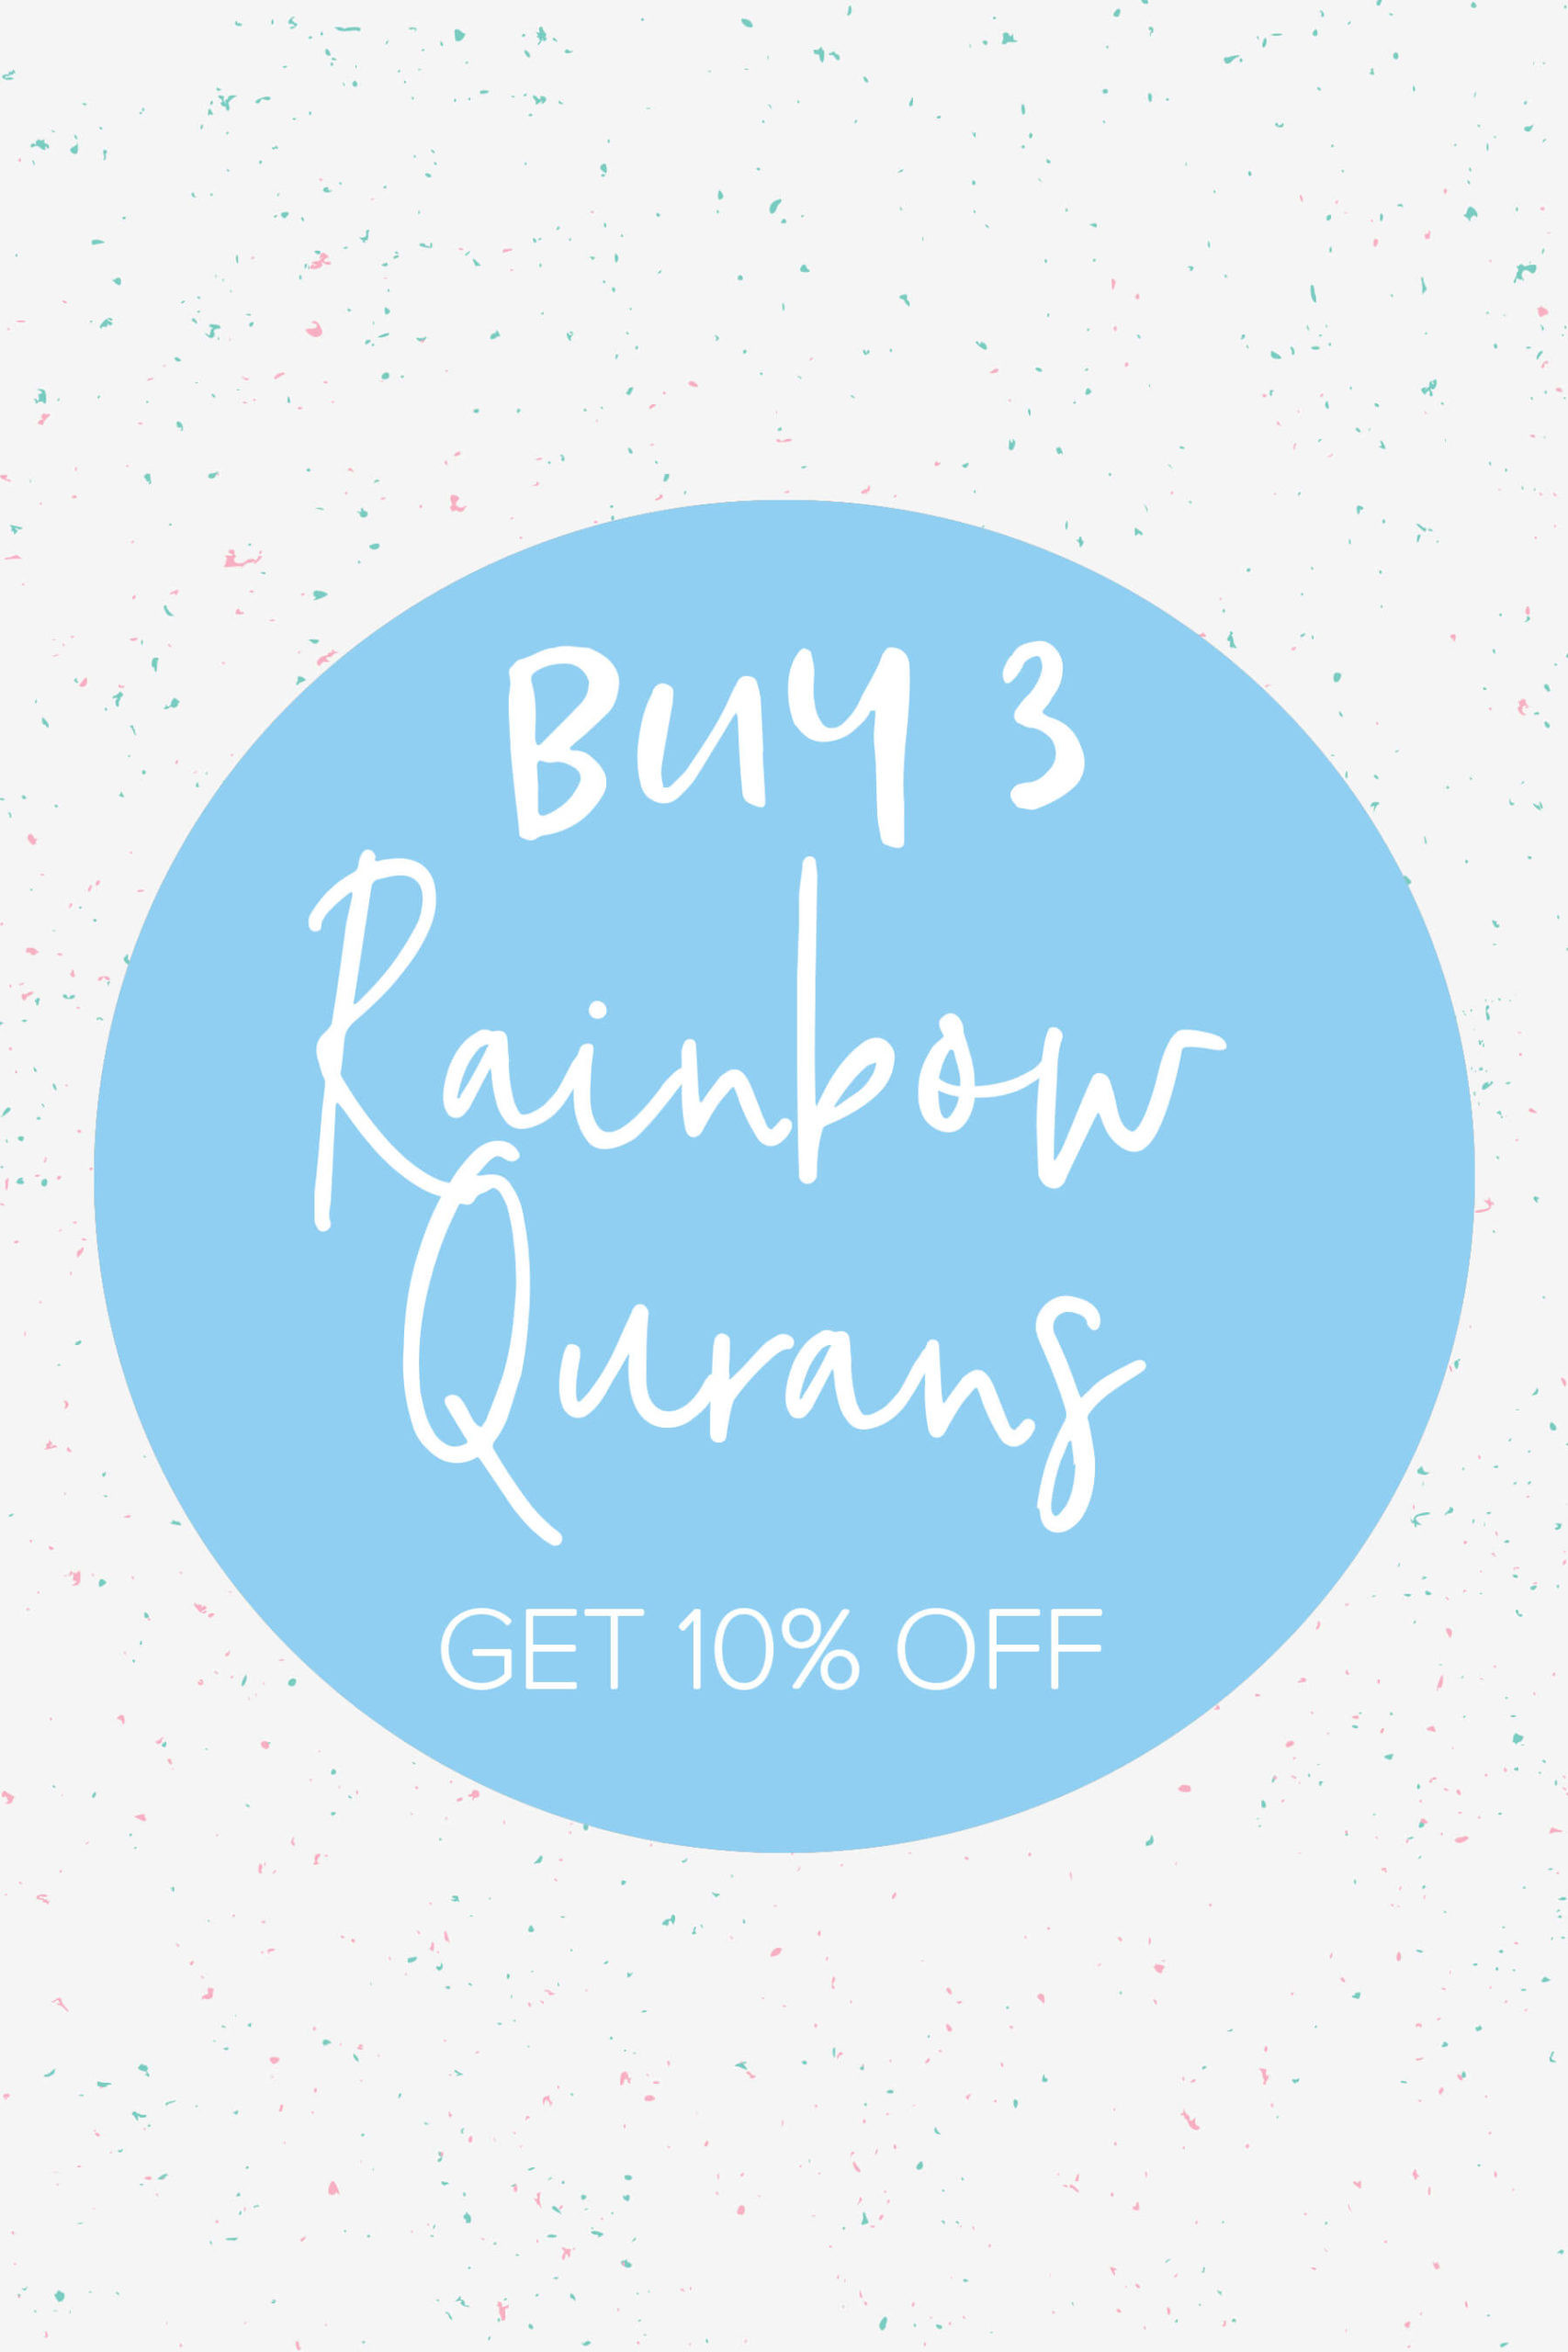 Buy 3 Rainbow Qurans Offer